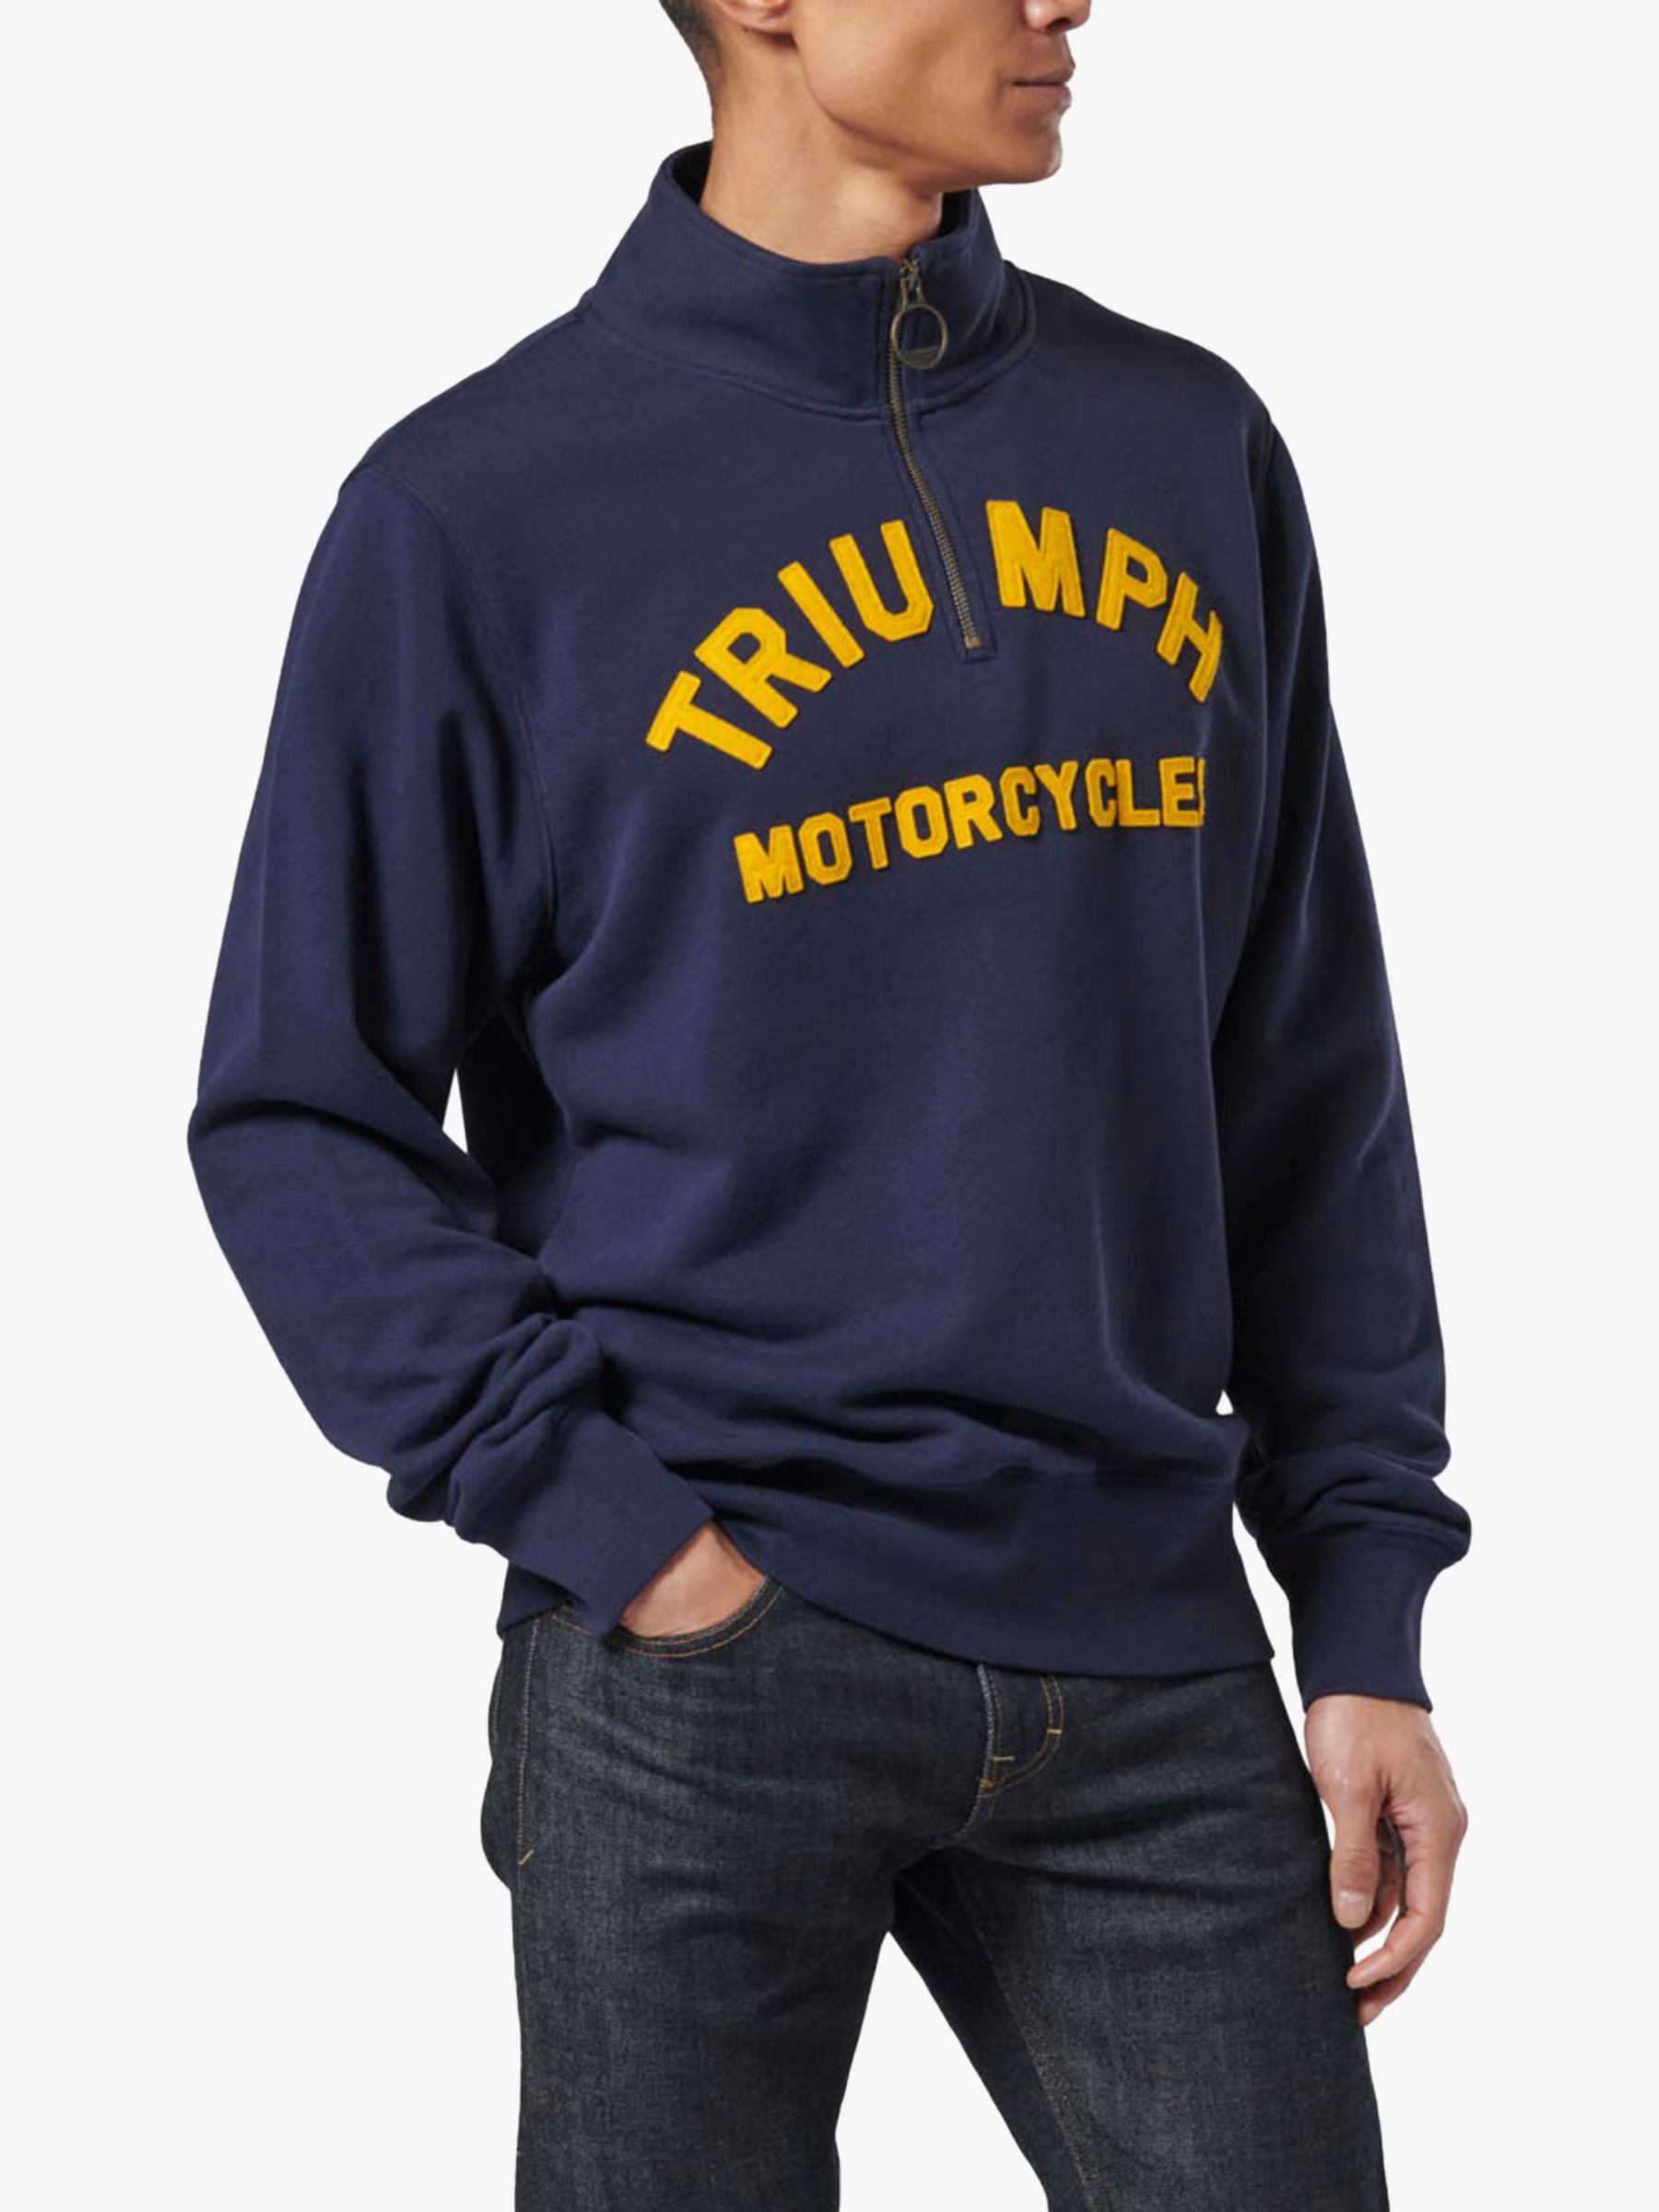 Triumph Motorcycles Ribble Zip Neck Sweatshirt, Indigo, M